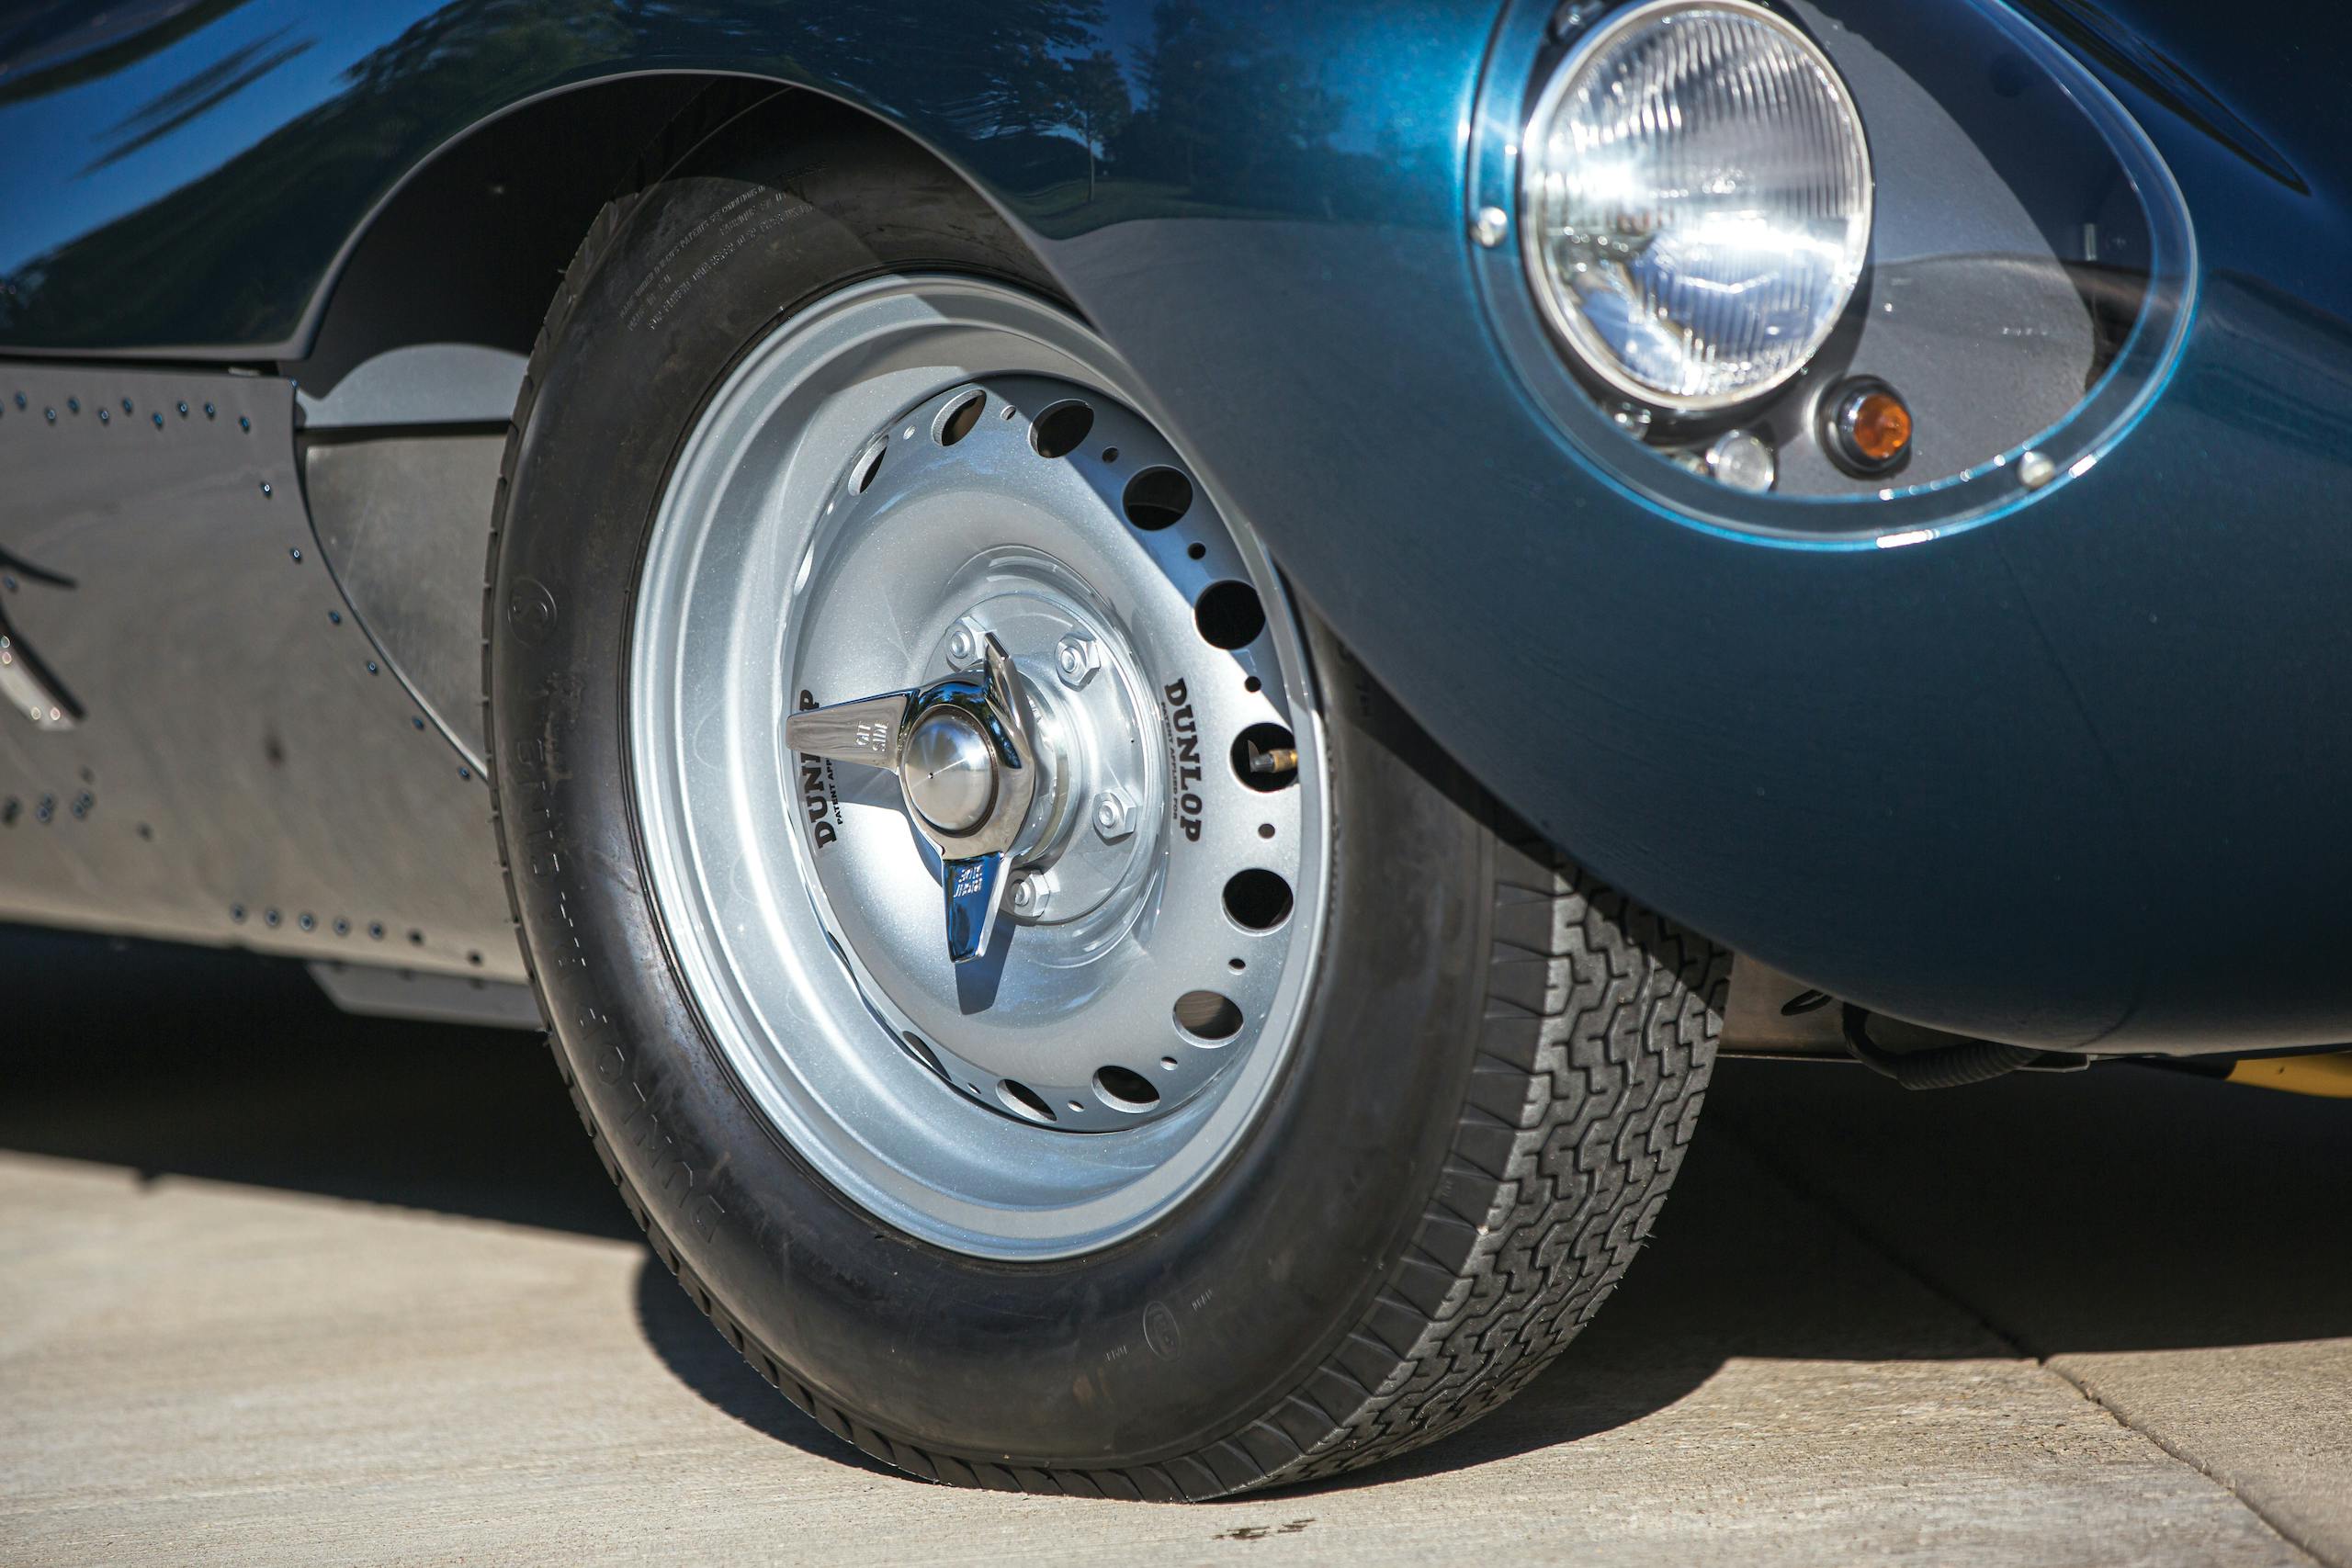 1955 Jag D-Type front wheel detail